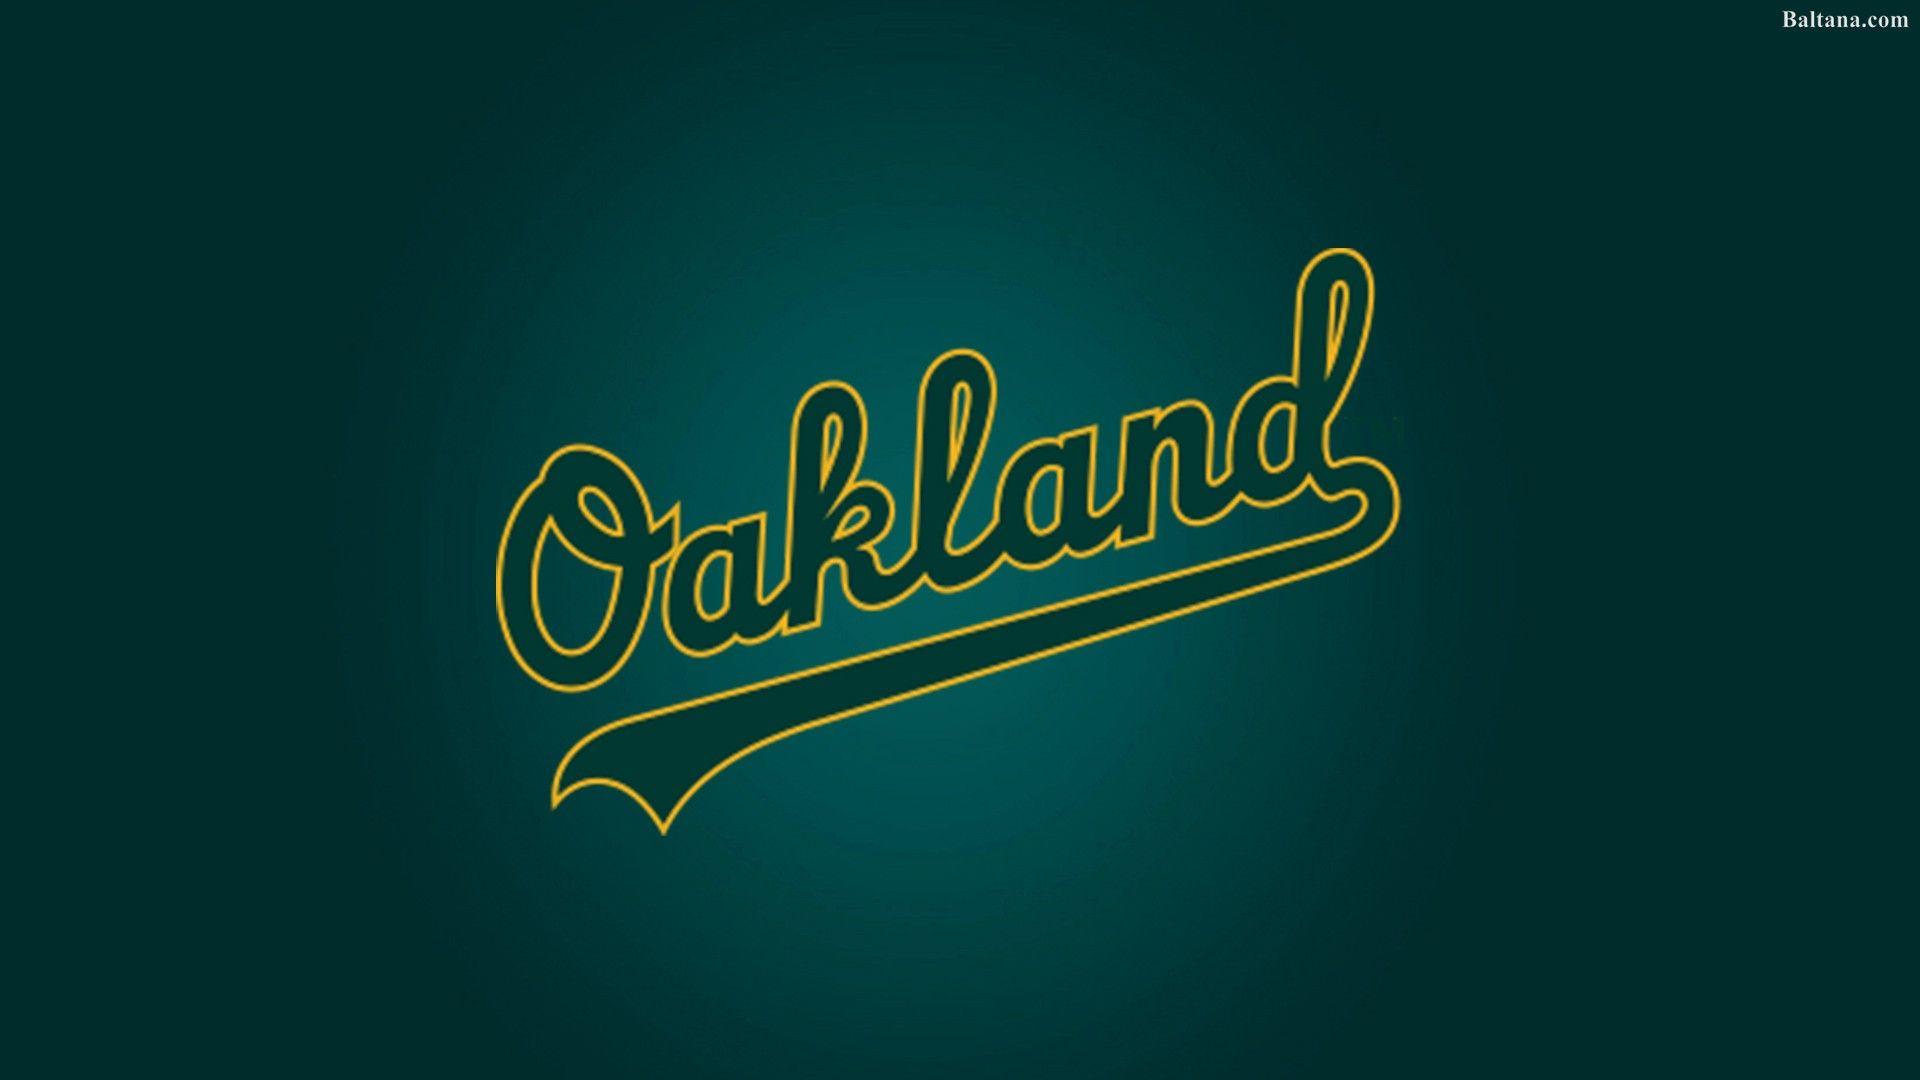 Oakland Athletics HD Desktop Wallpaper 33235